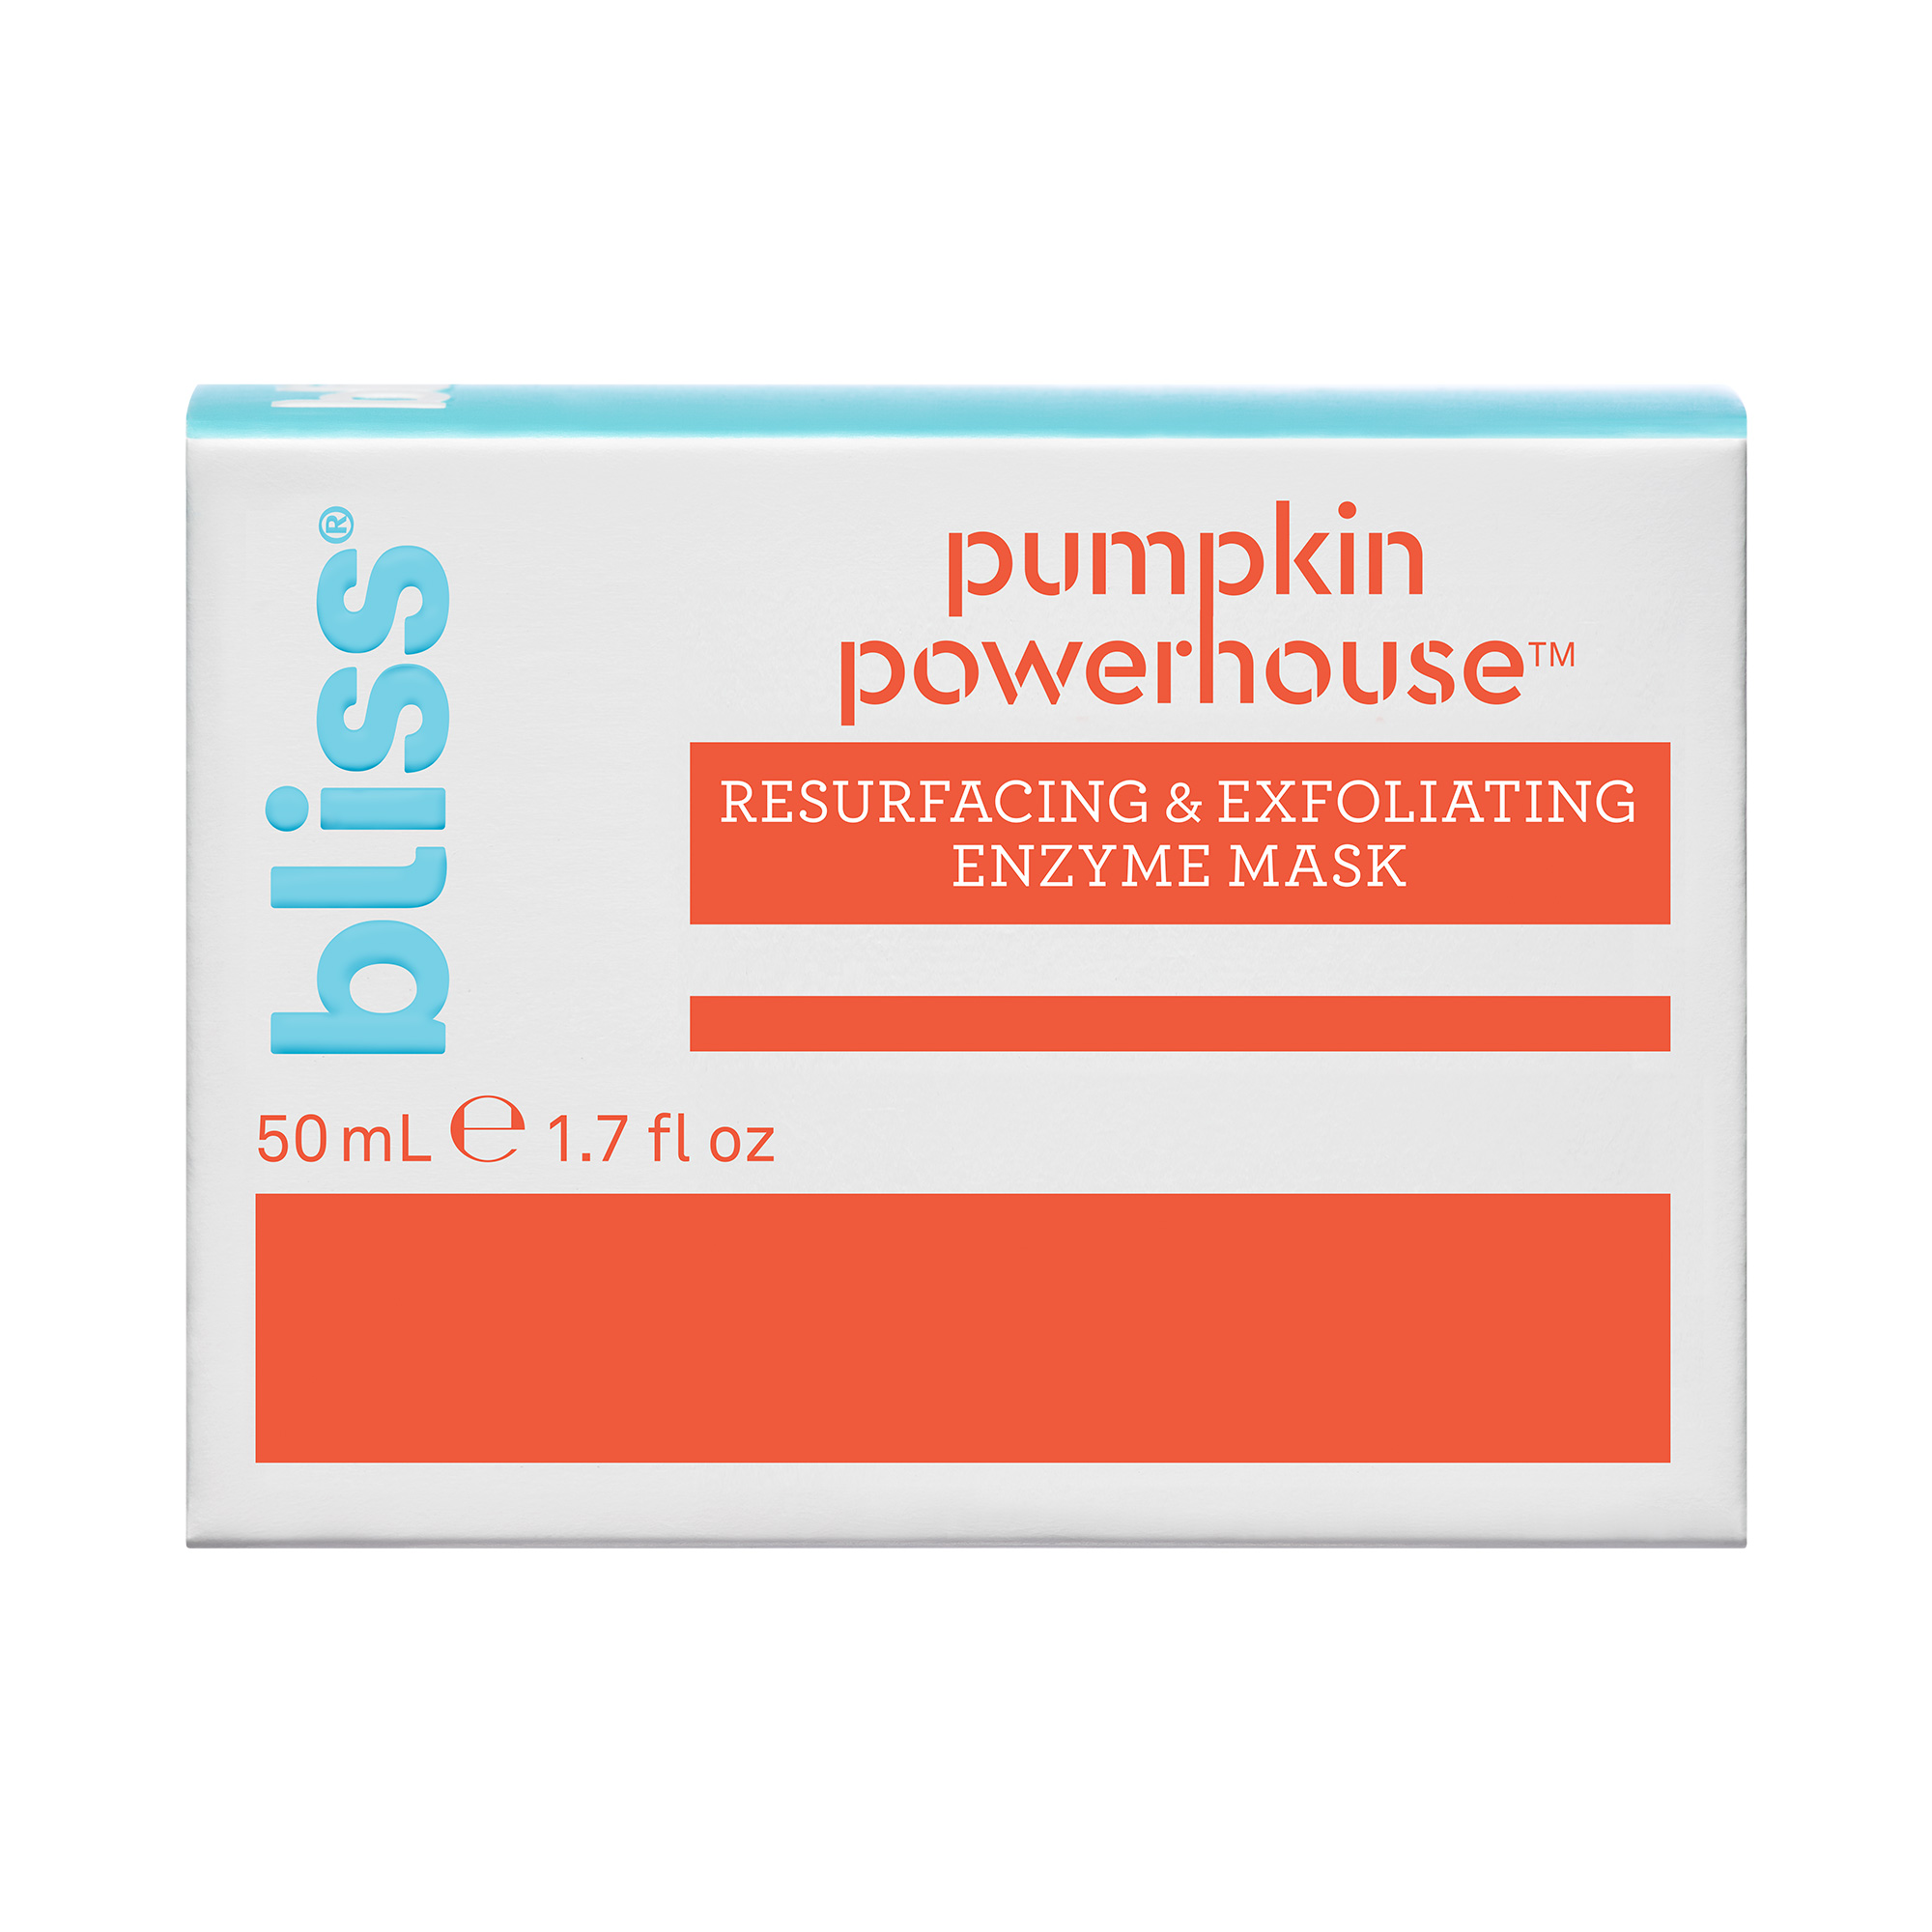 Bliss Powerhouse Pumpkin Face Mask, Resurfacing & Exfoliating Pumpkin Enzyme Mask, 1.7 fl oz - image 2 of 8